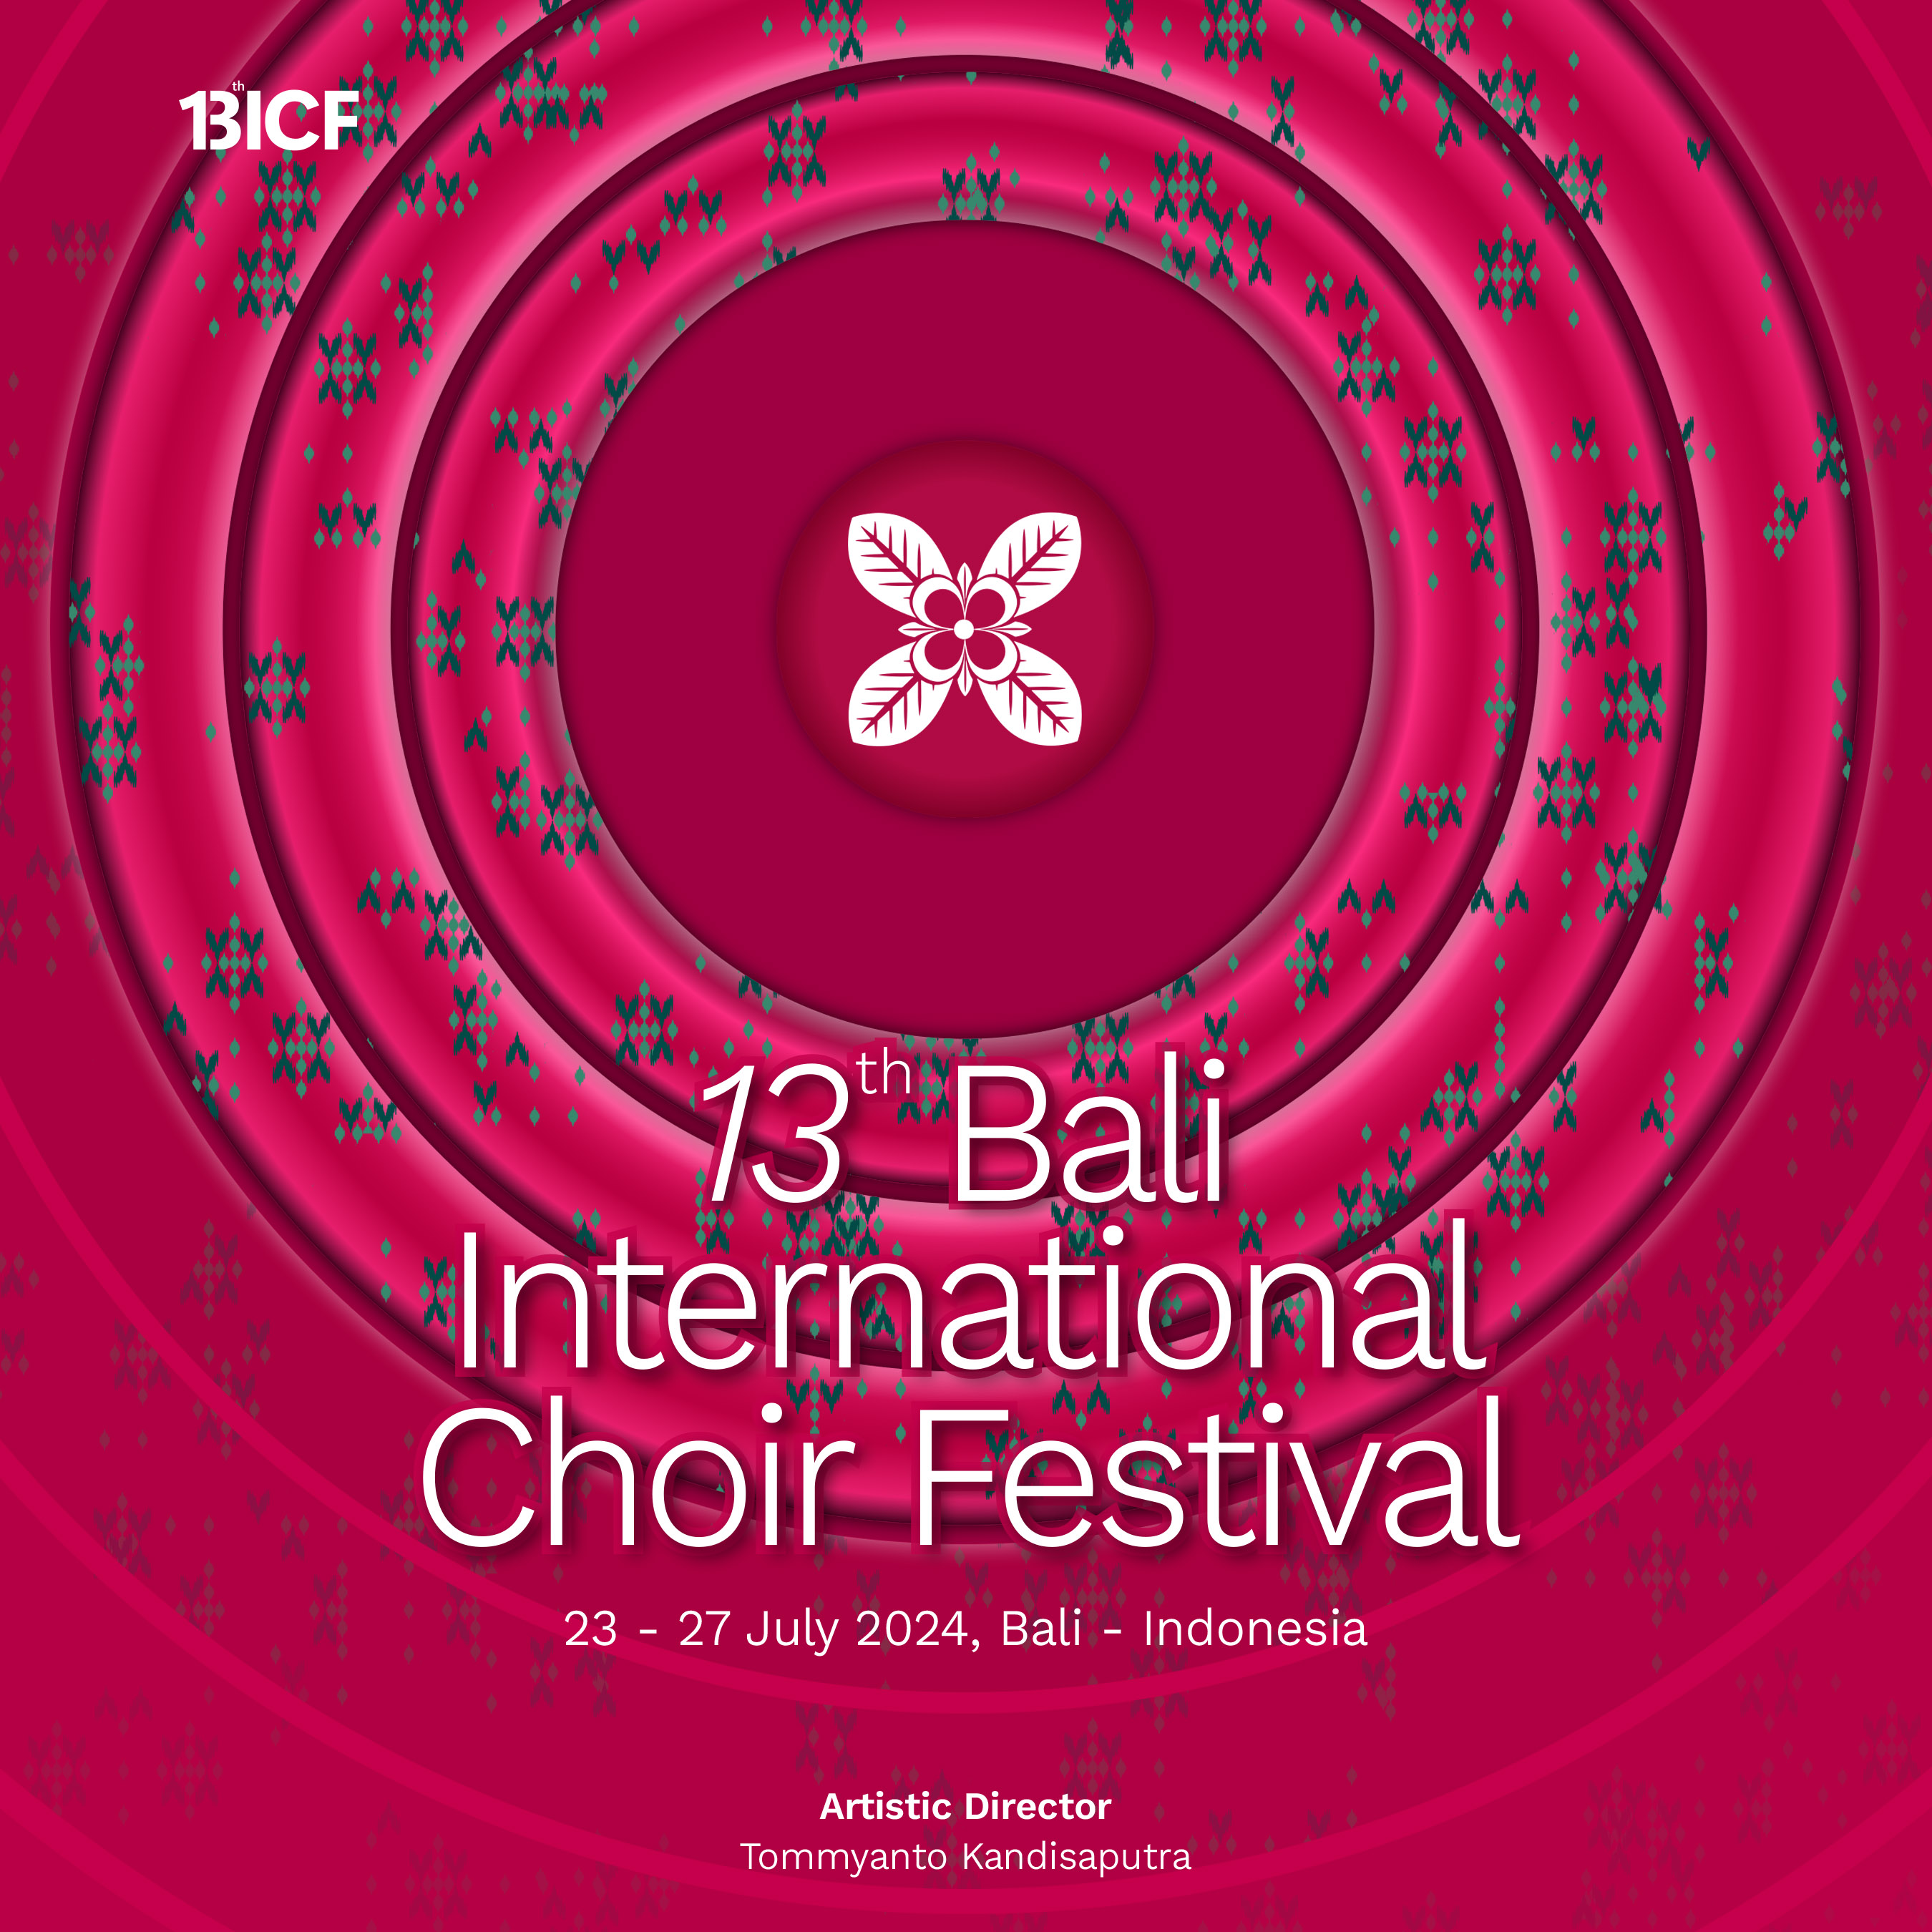 The 13th Bali International Choir Festival 2024